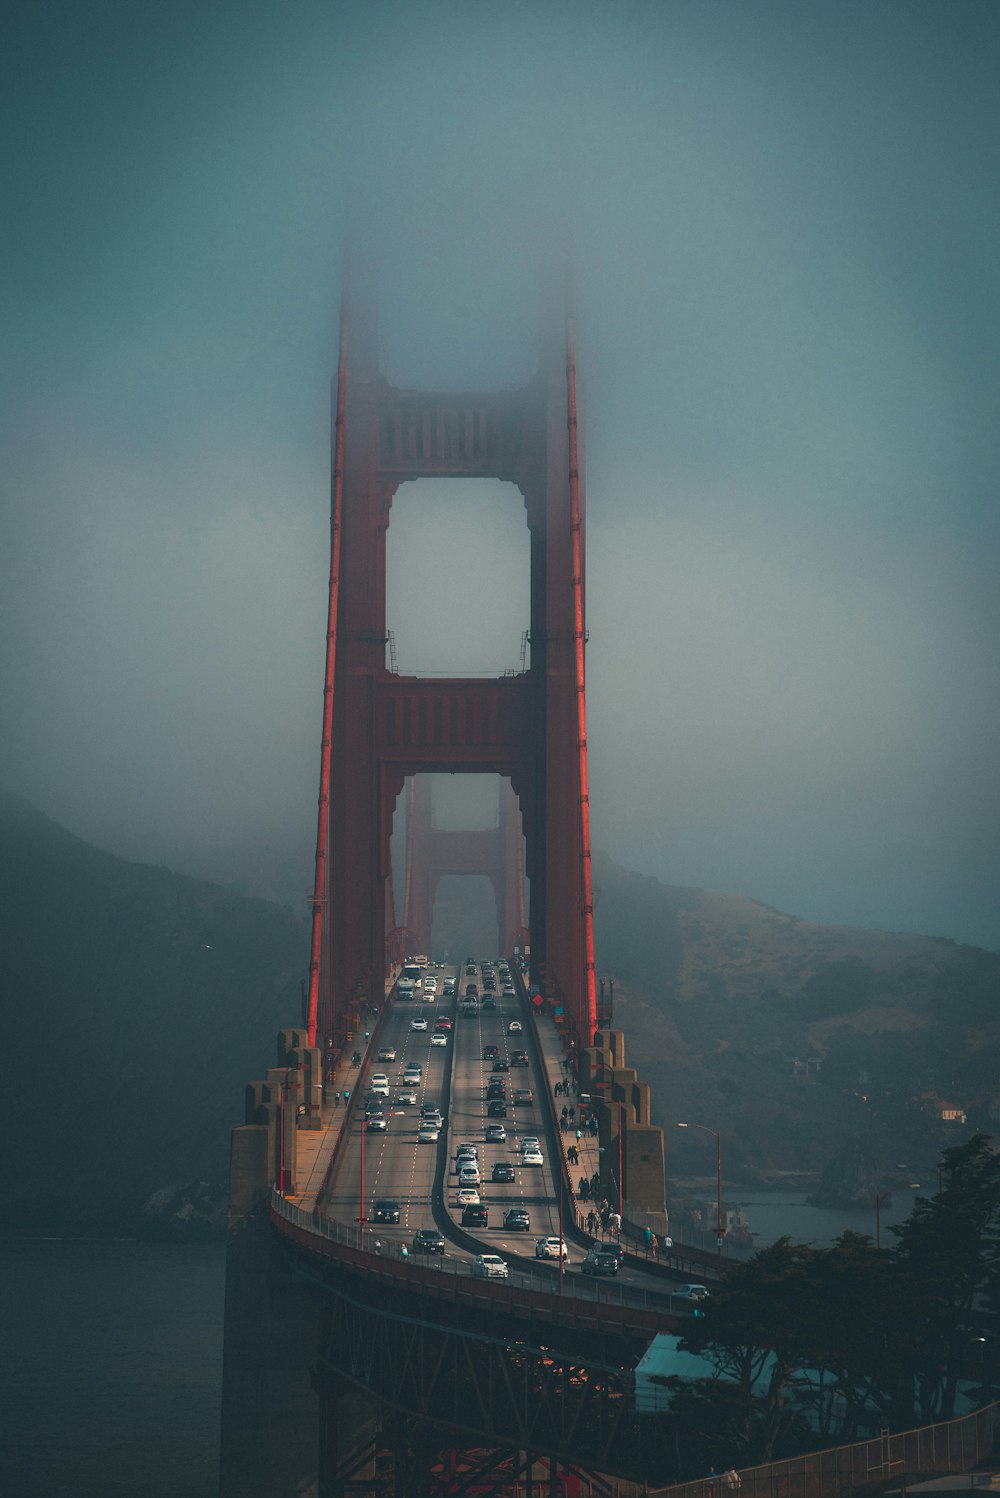 Golden Gate Bridge during foggy weather